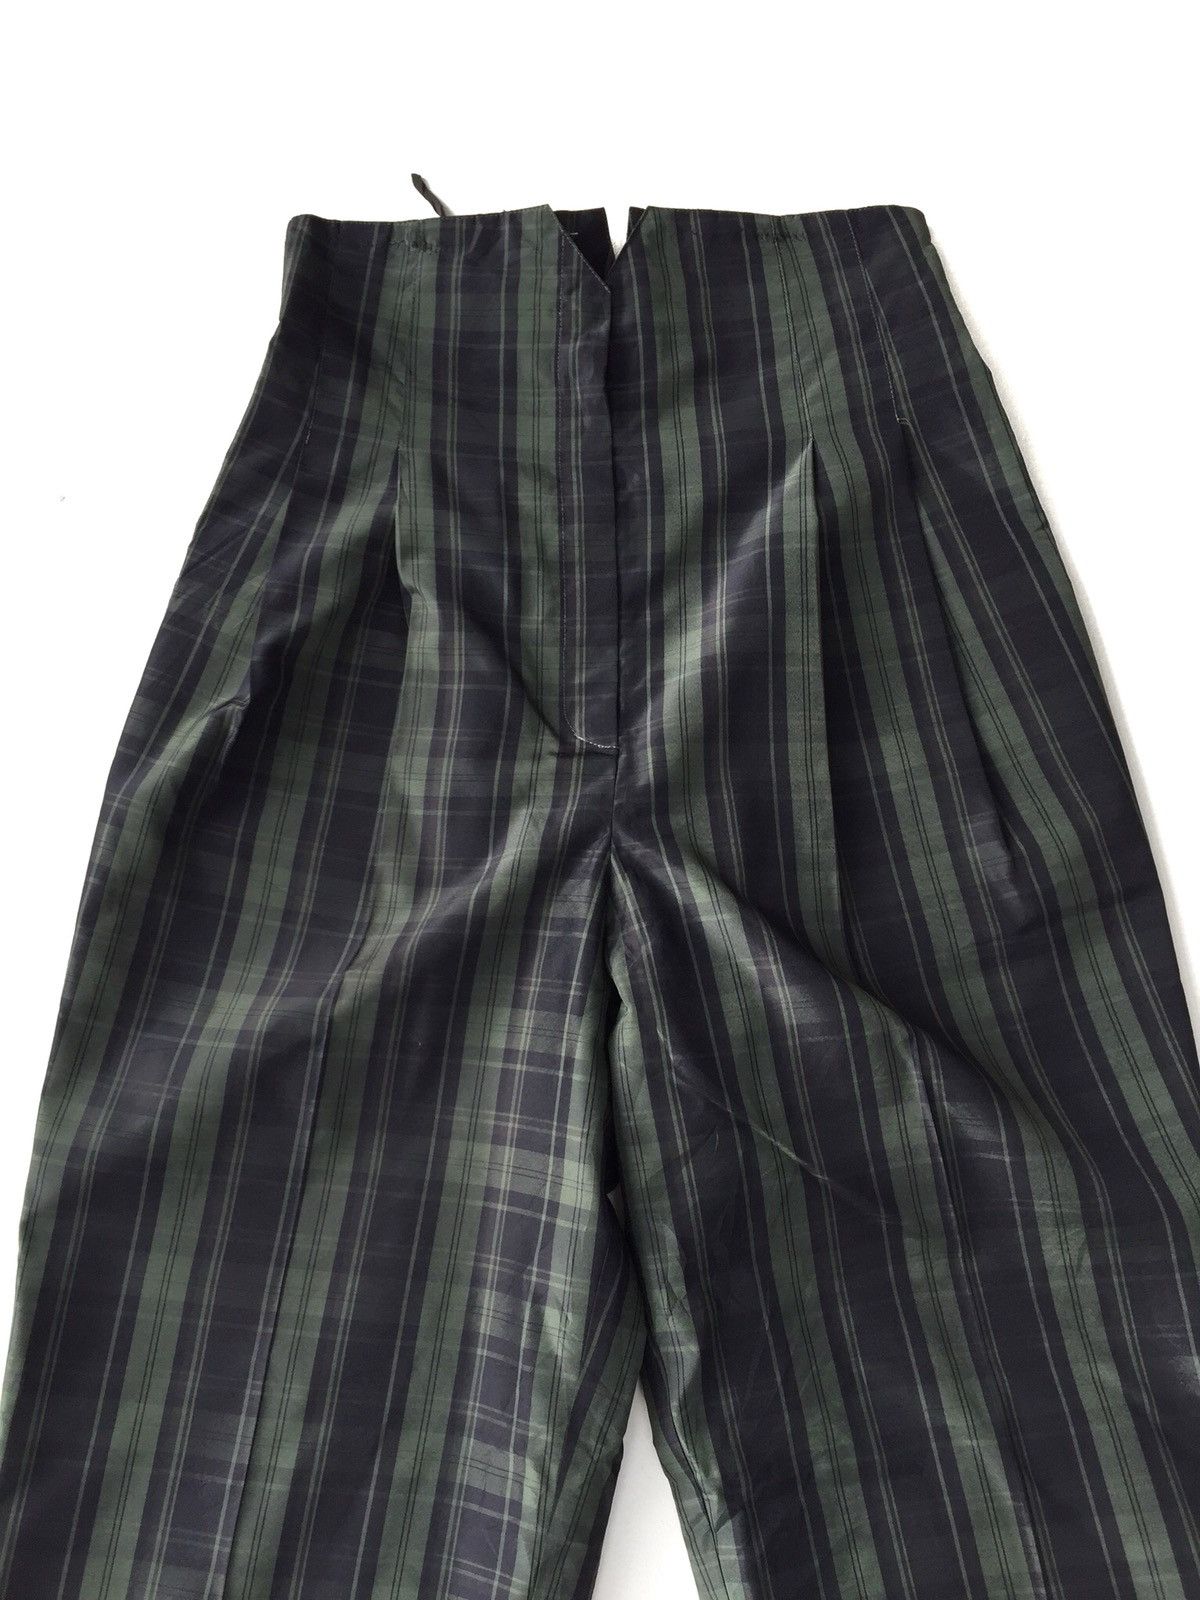 Vintage Vintage Norma Kamali Checkered High Waist Pants Size US 26 / EU 42 - 3 Thumbnail